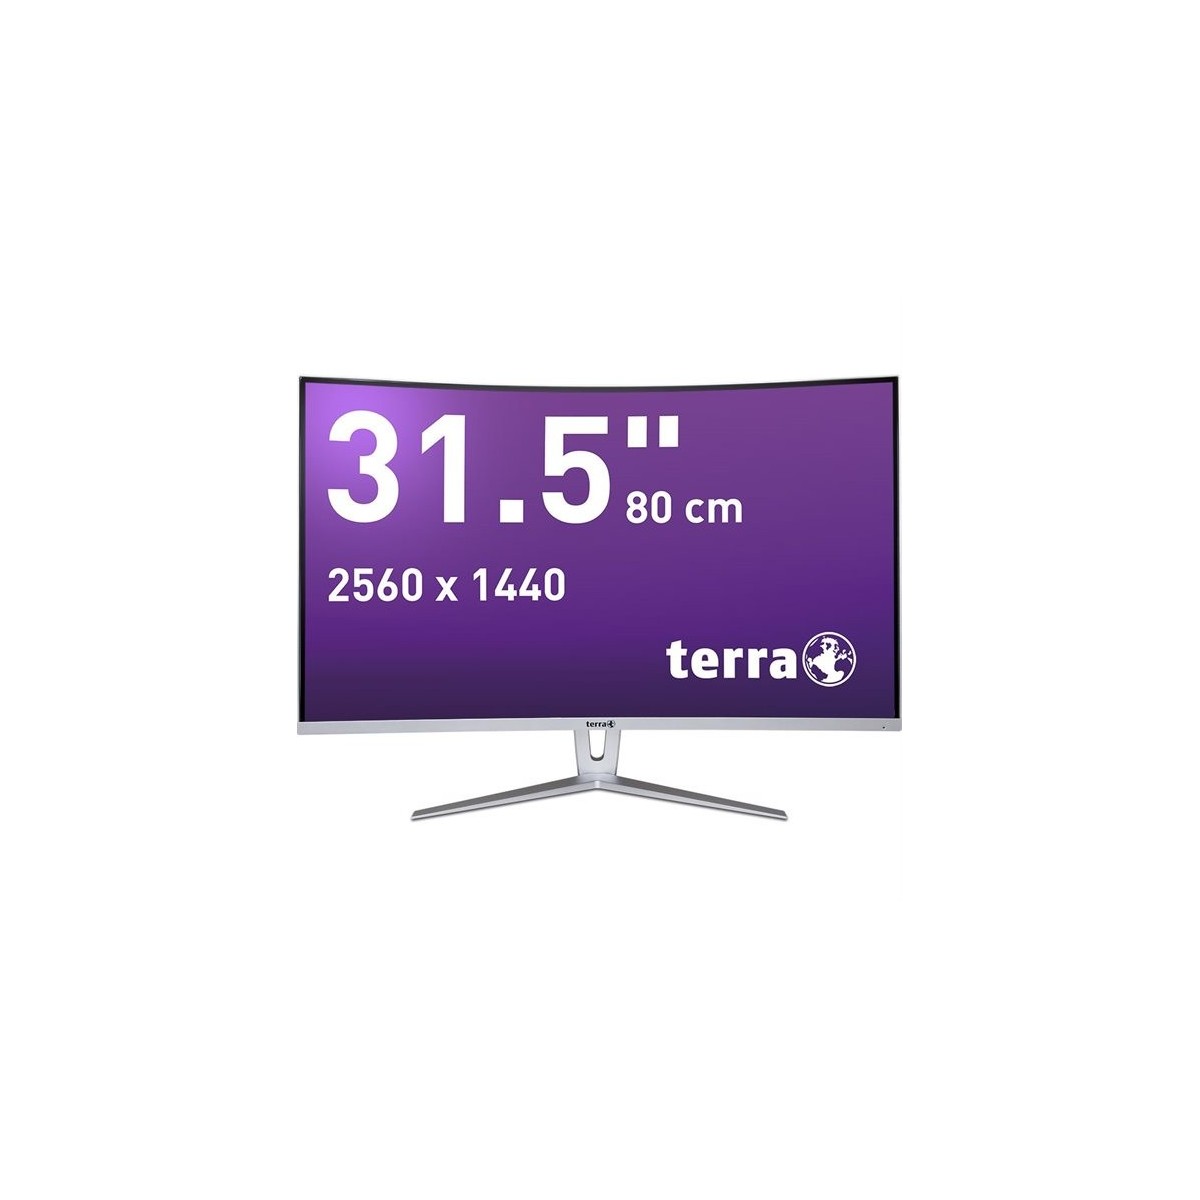 TERRA LCD-LED 3280W V2 silver-white CURVED 2xHDMI-DP - Flat Screen - 80 cm